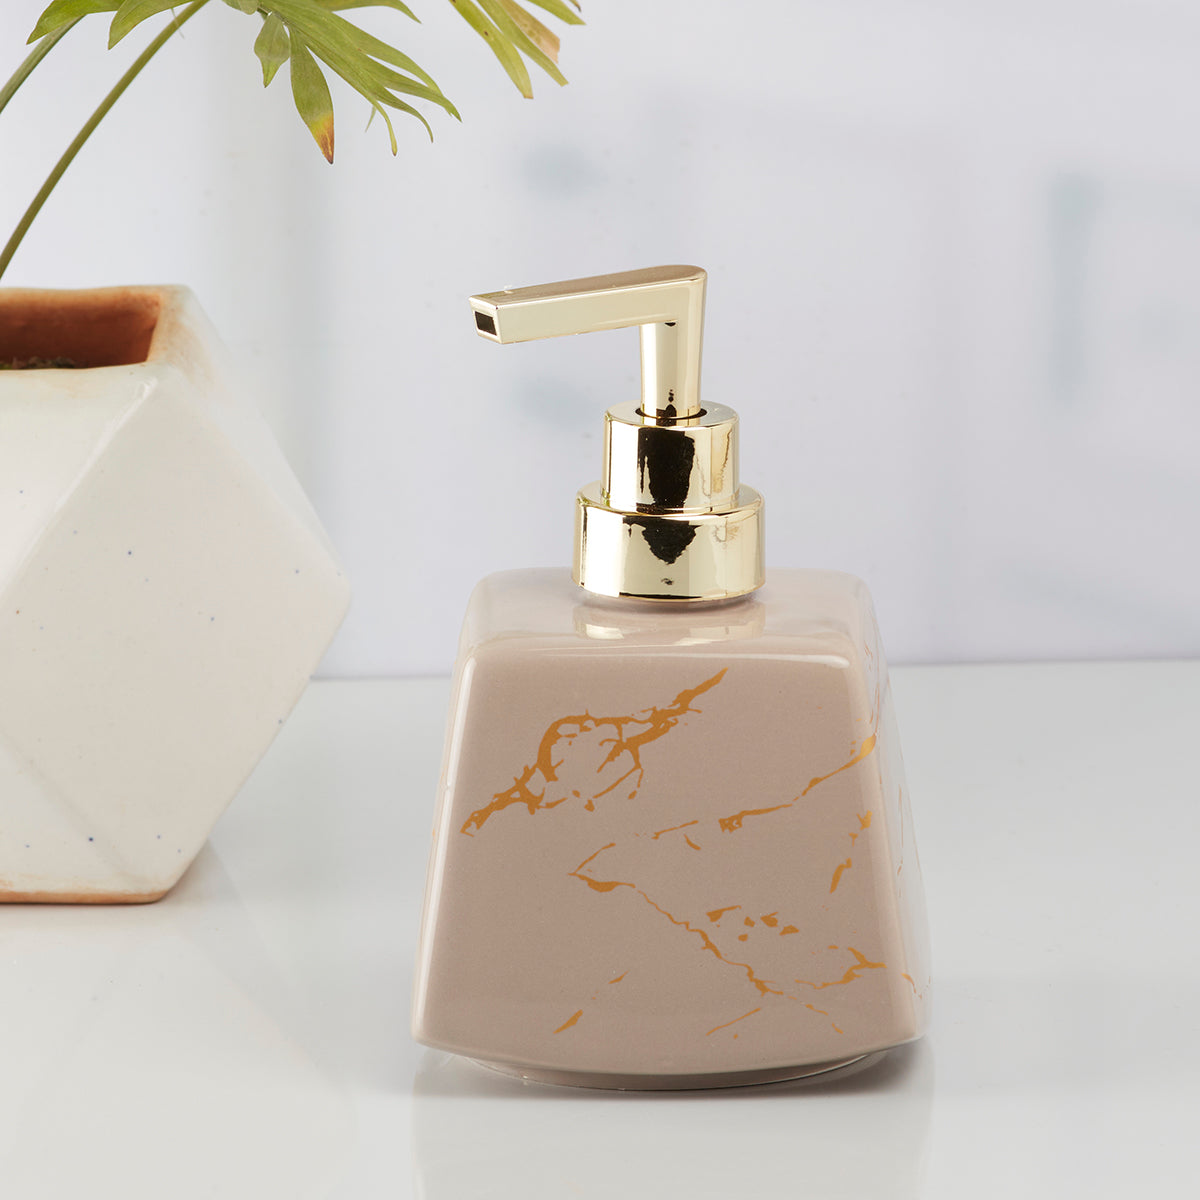 Ceramic Soap Dispenser handwash Pump for Bathroom, Set of 1, Grey/Gold (10152)